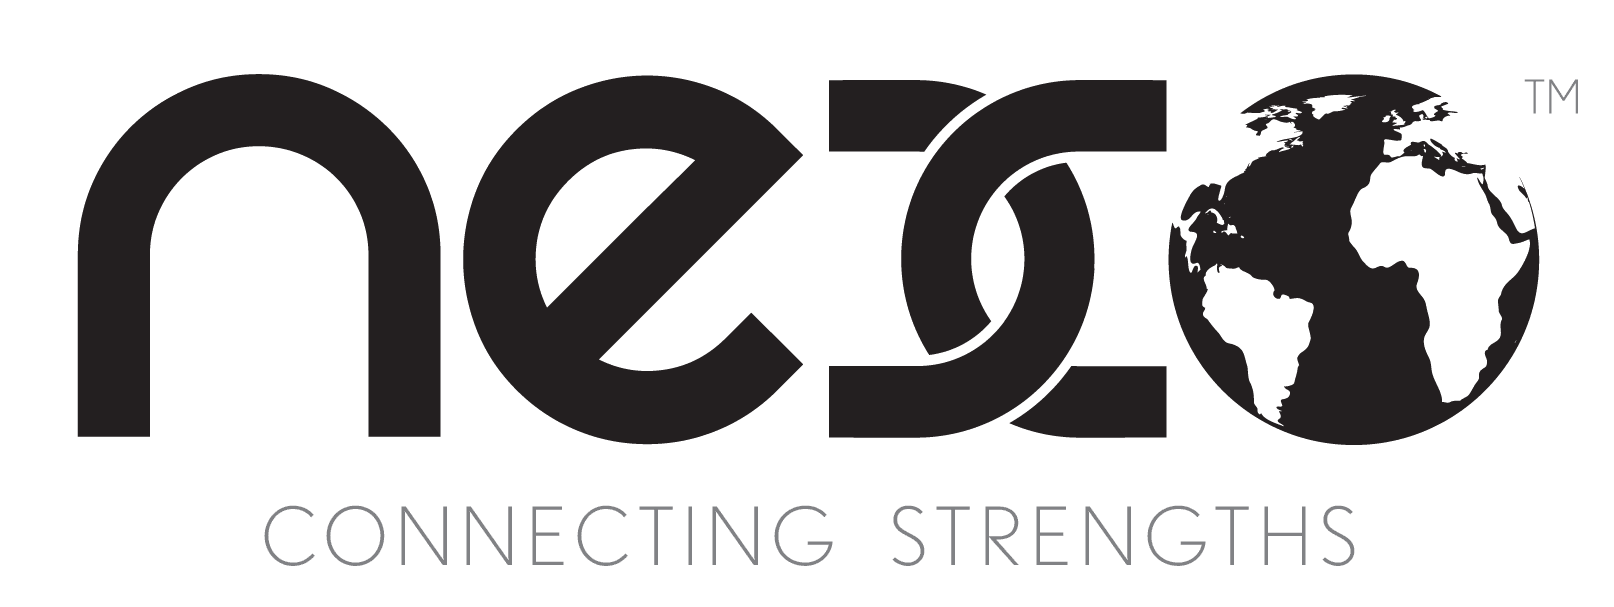 nexo connecting strength logo